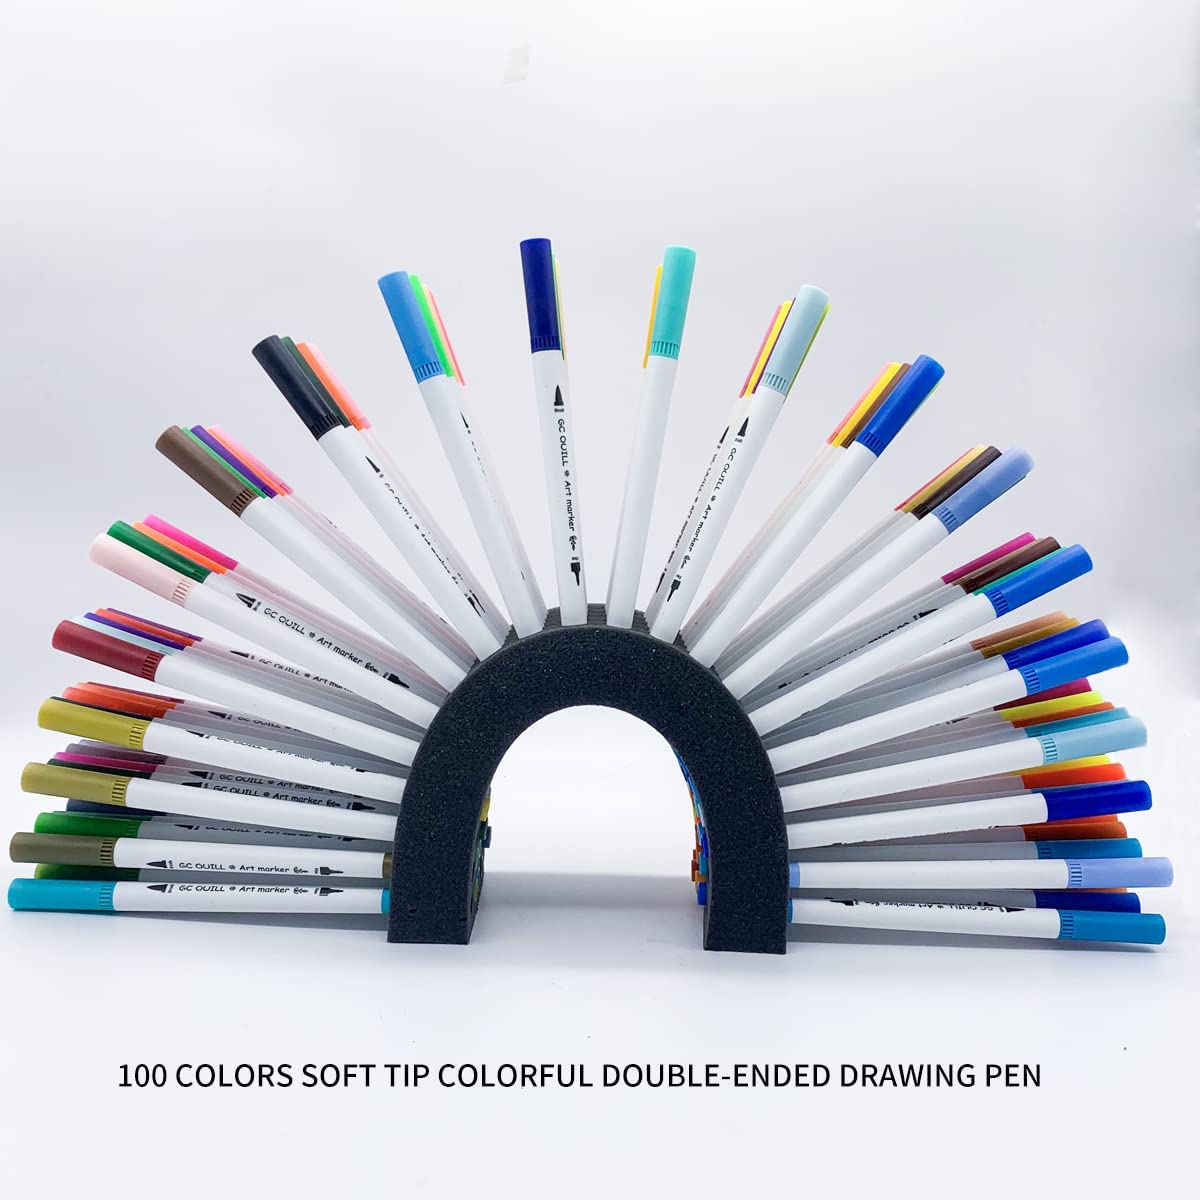 hhhouu 36 Colors Dual Brush Pen Set, Felt Tip Art Pens Brush Tip Markers  for Adult Coloring Drawing Bullet Journals Planners Hand Lettering